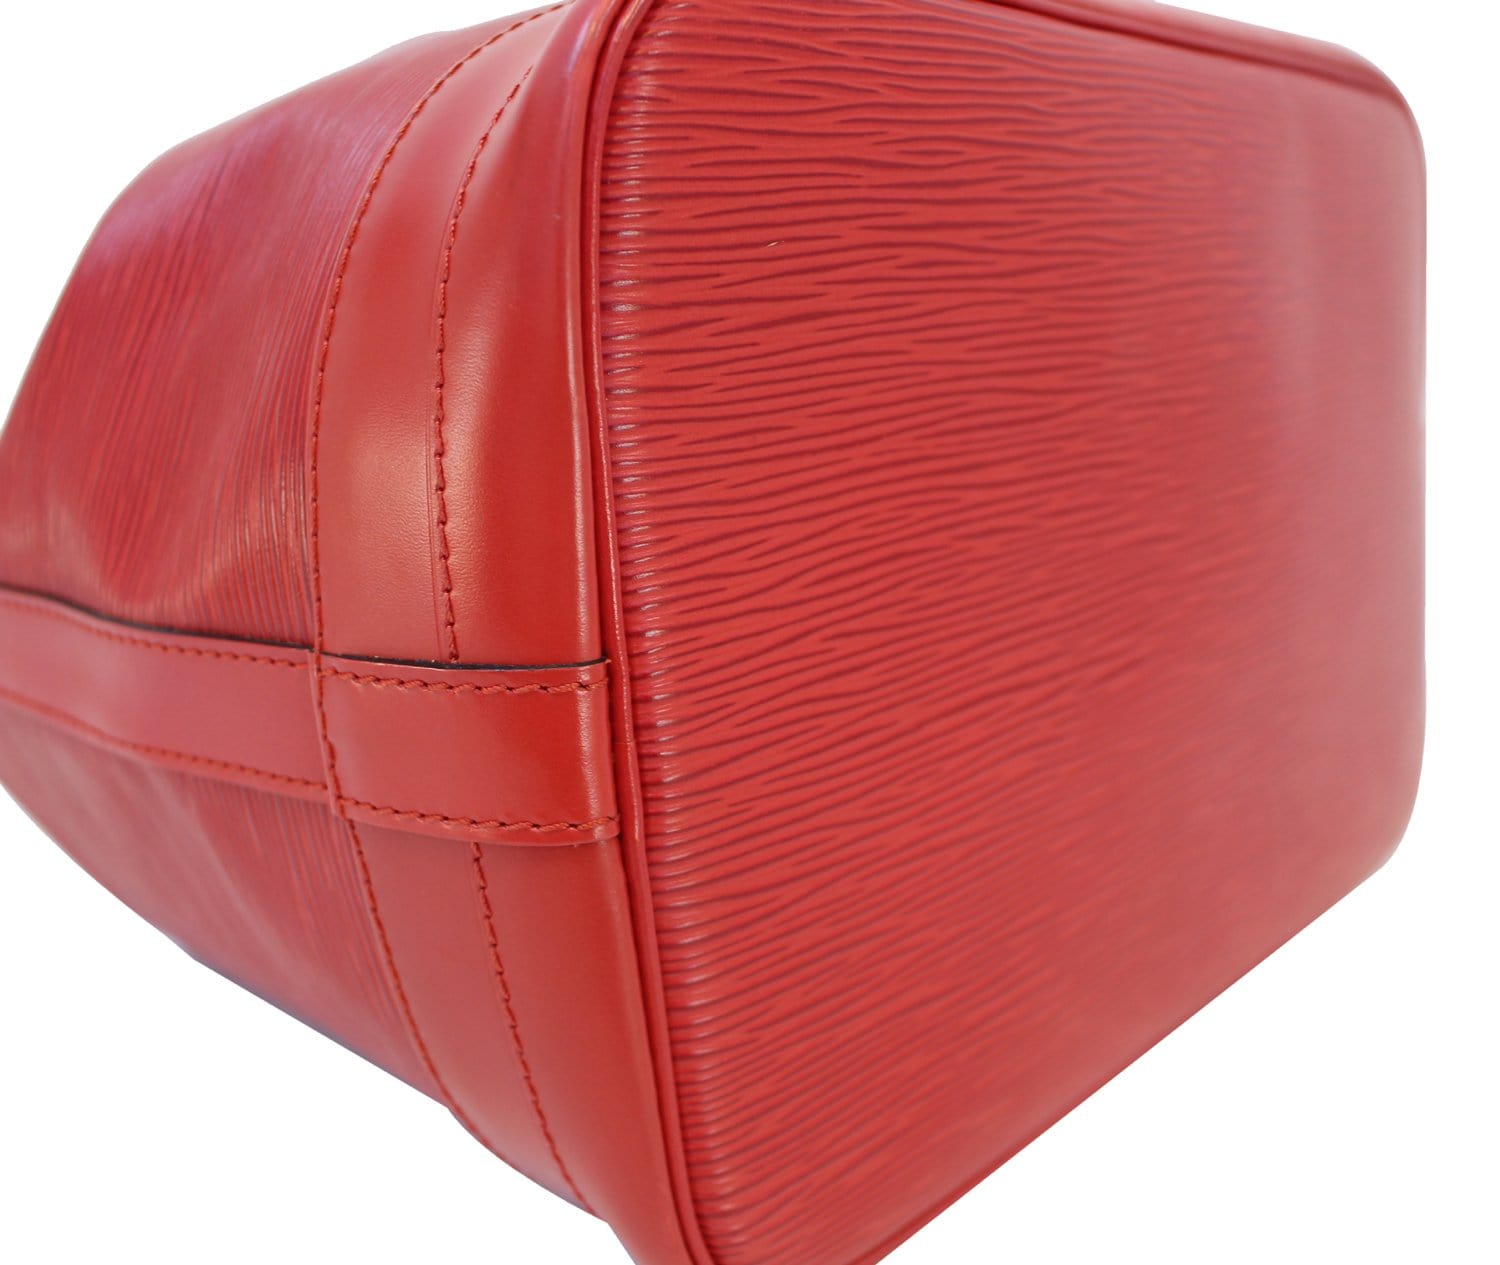 Auth LOUIS VUITTON Epi Tailley Tote Handbag Shoulder Bag Red/Navy